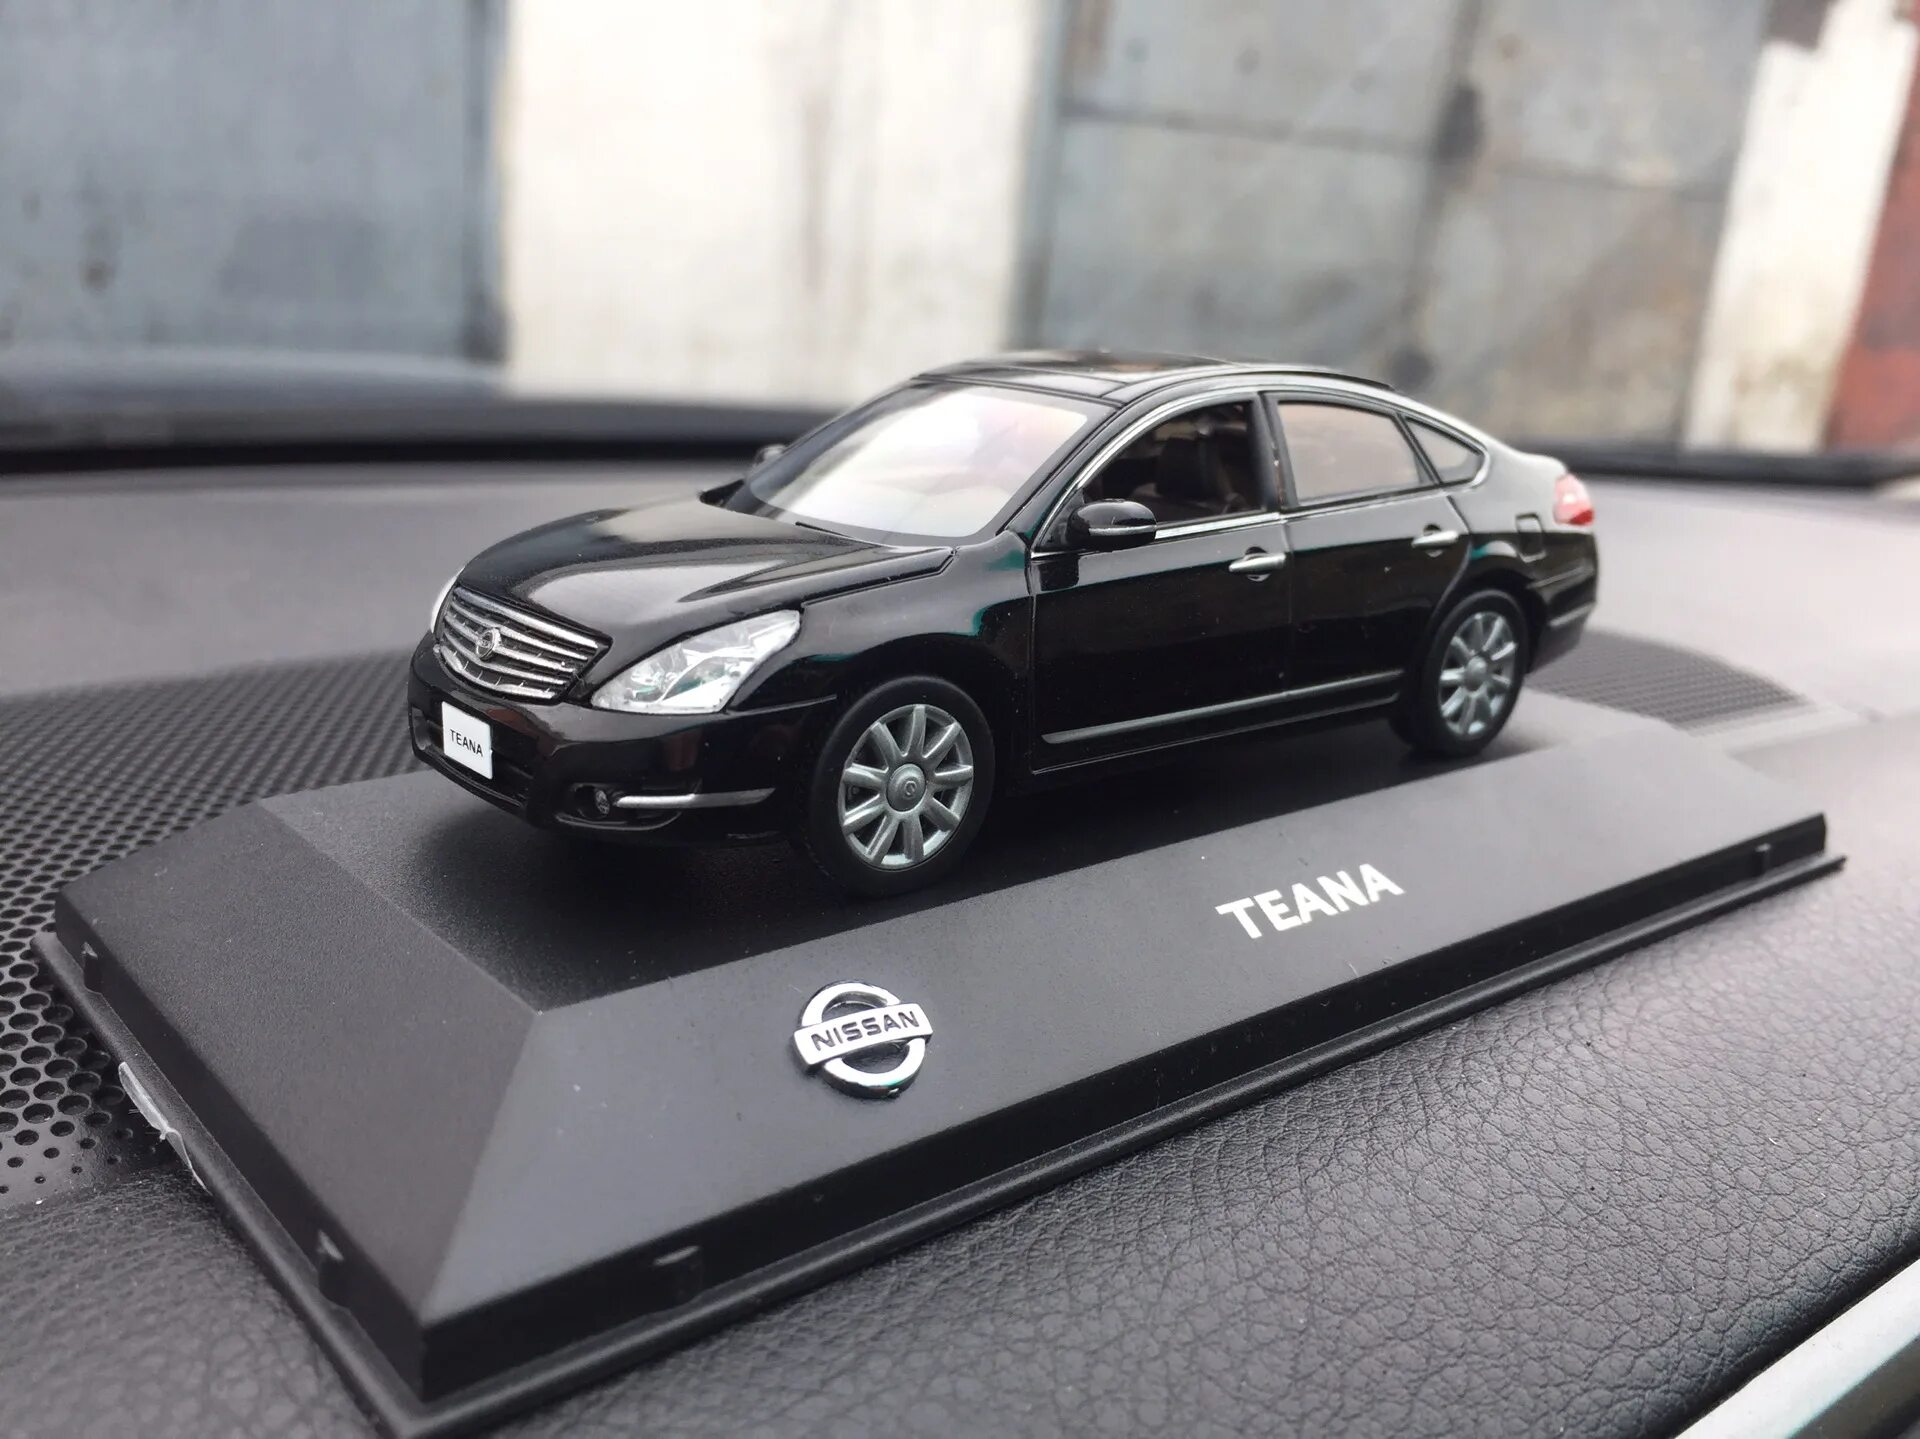 1/43 Nissan Teana. Модель Ниссан Теана j32. Nissan Teana 1 43 j31 игрушка. Моделька Nissan Teana j32.